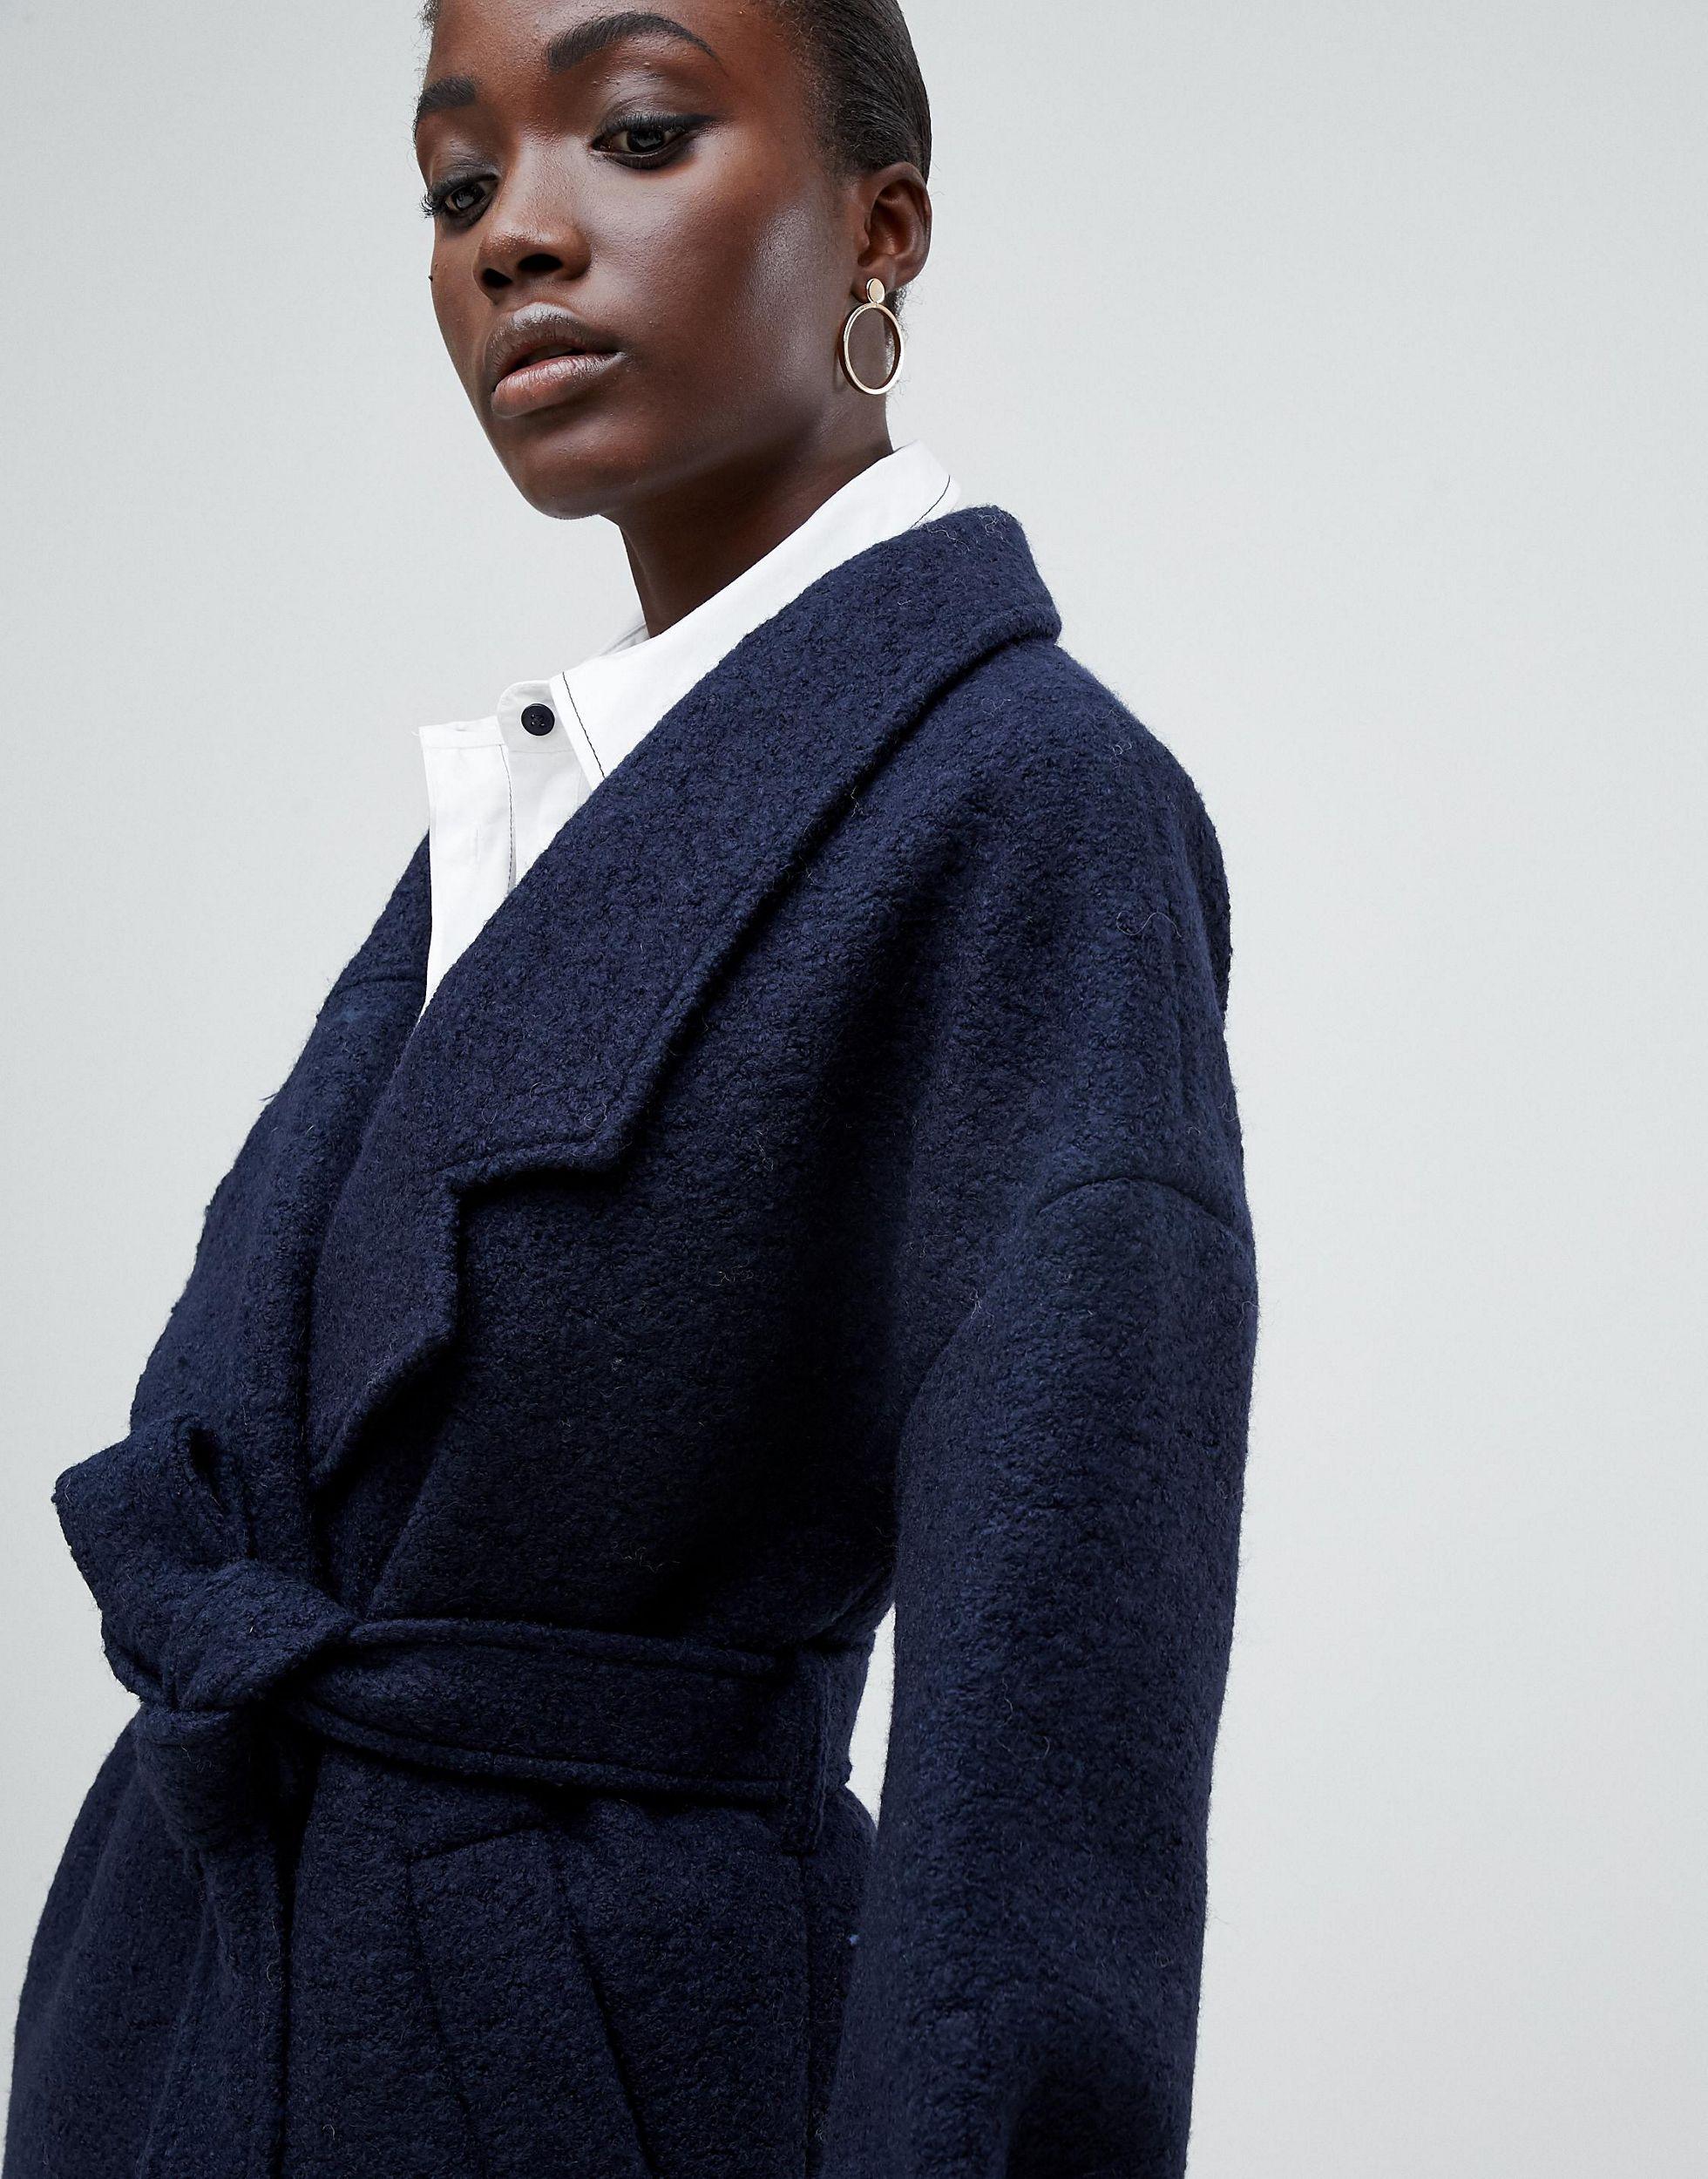 SELECTED Femme Wrap Wool Coat in Navy (Blue) - Lyst